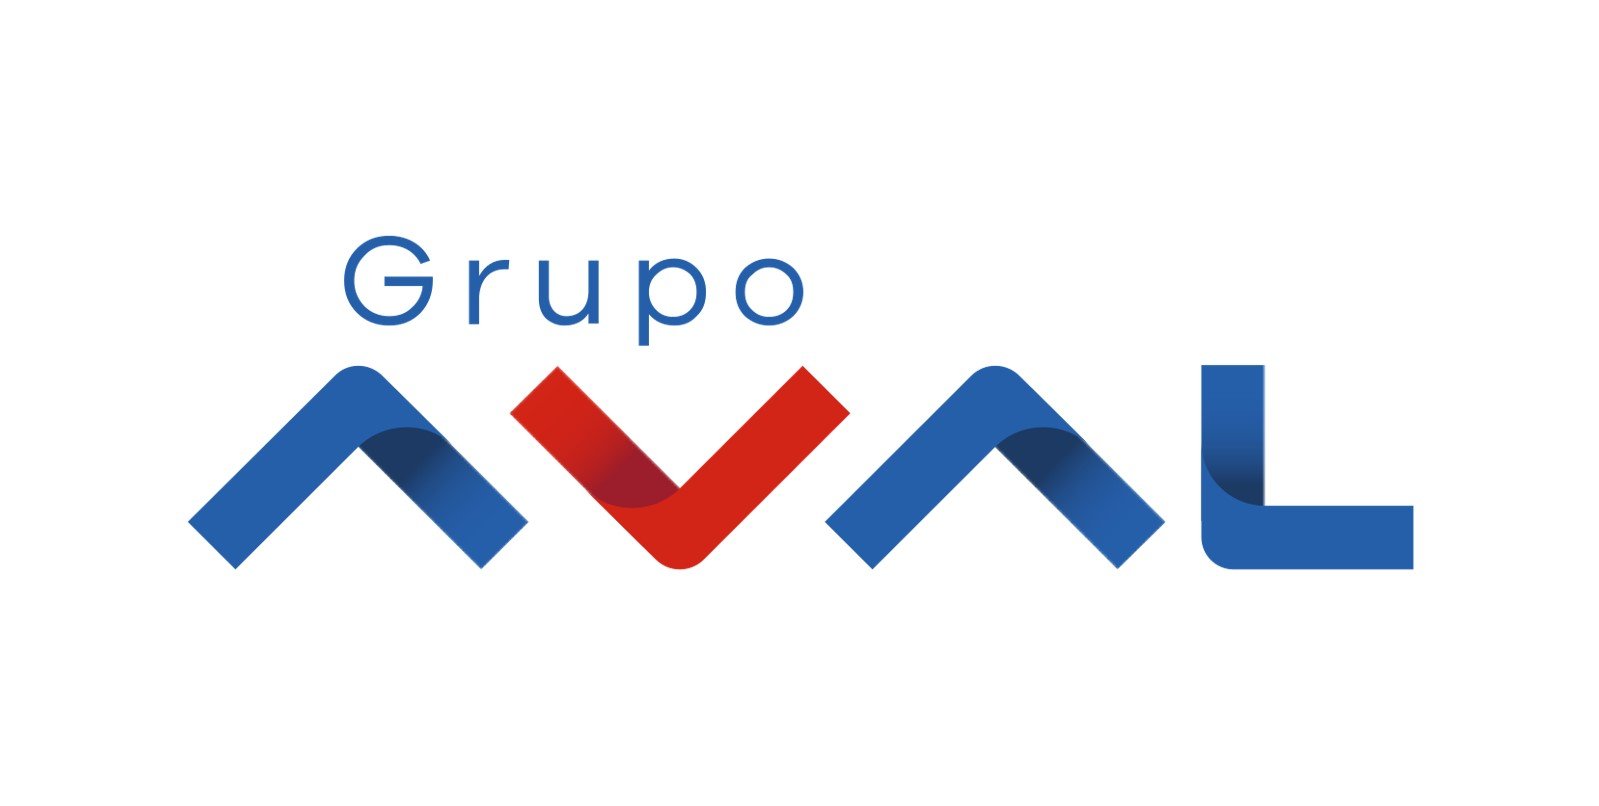 Grupo AVAL logo.jpg